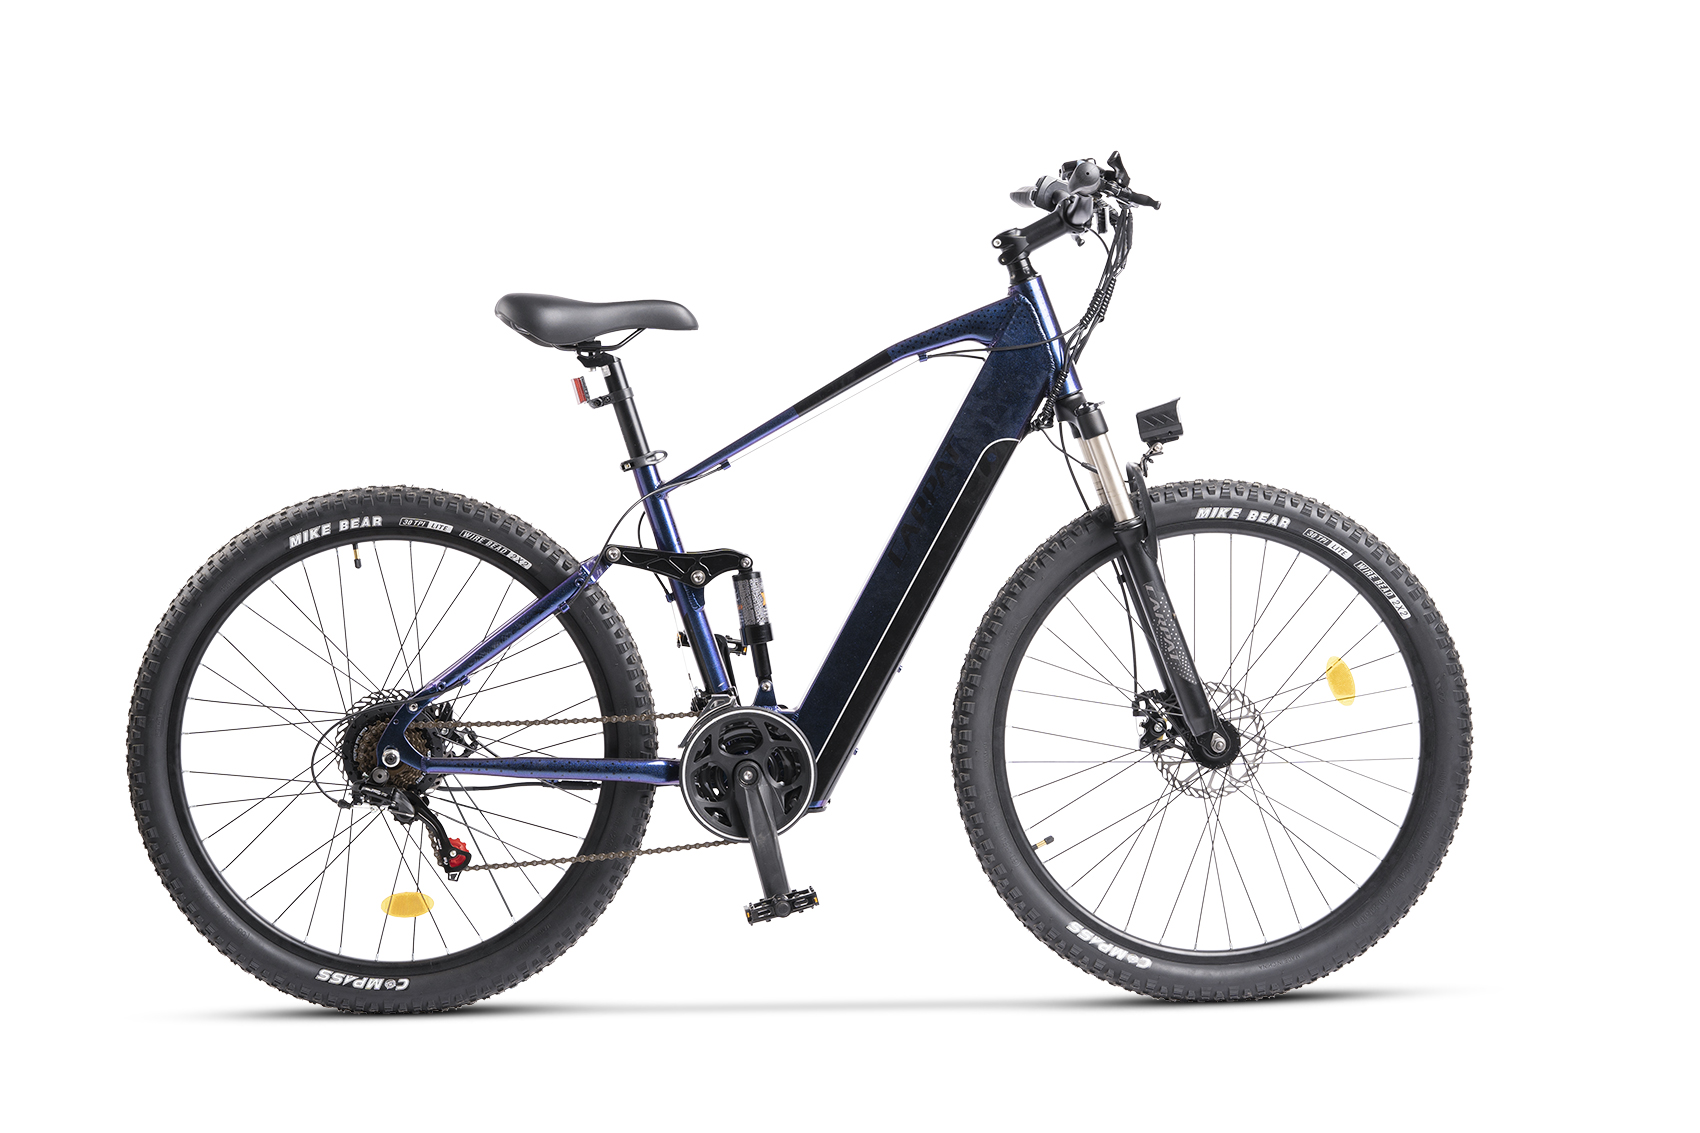 BICICLETE ELECTRICE - Bicicleta Electrica MTB-FS (E-Bike) CARPAT C275M17E 27.5", Albastru Cameleon, carpatsport.ro